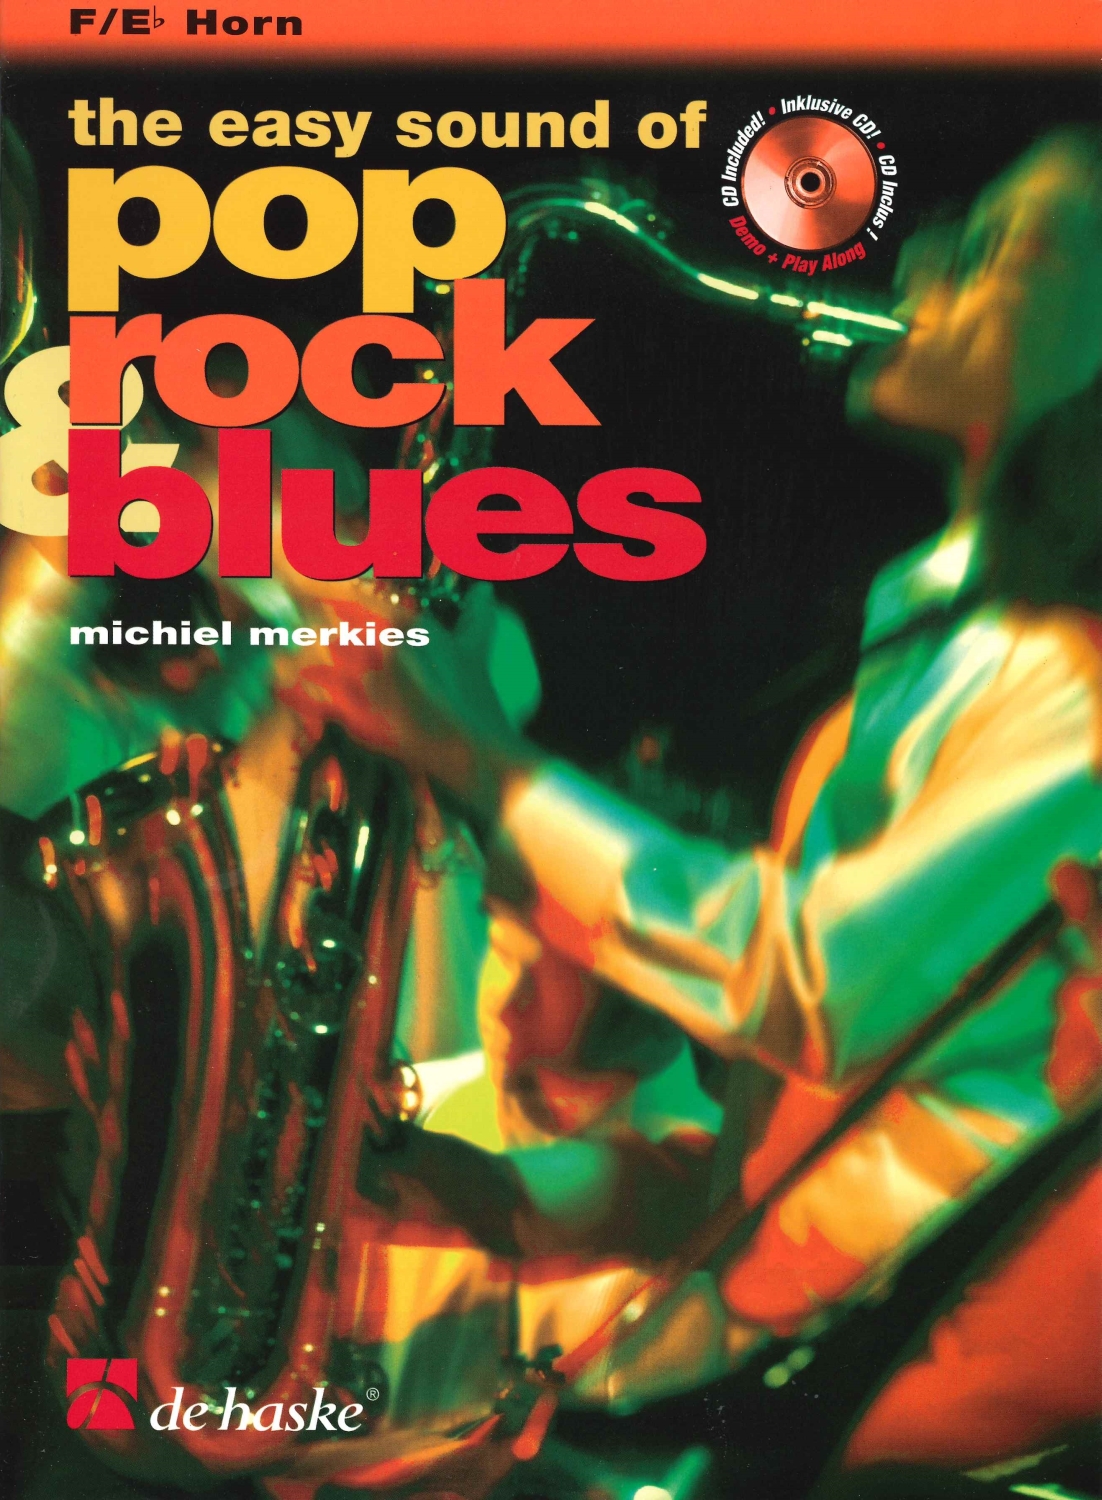 michiel-merkies-the-easy-sound-of-pop-rock--blues-_0001.JPG